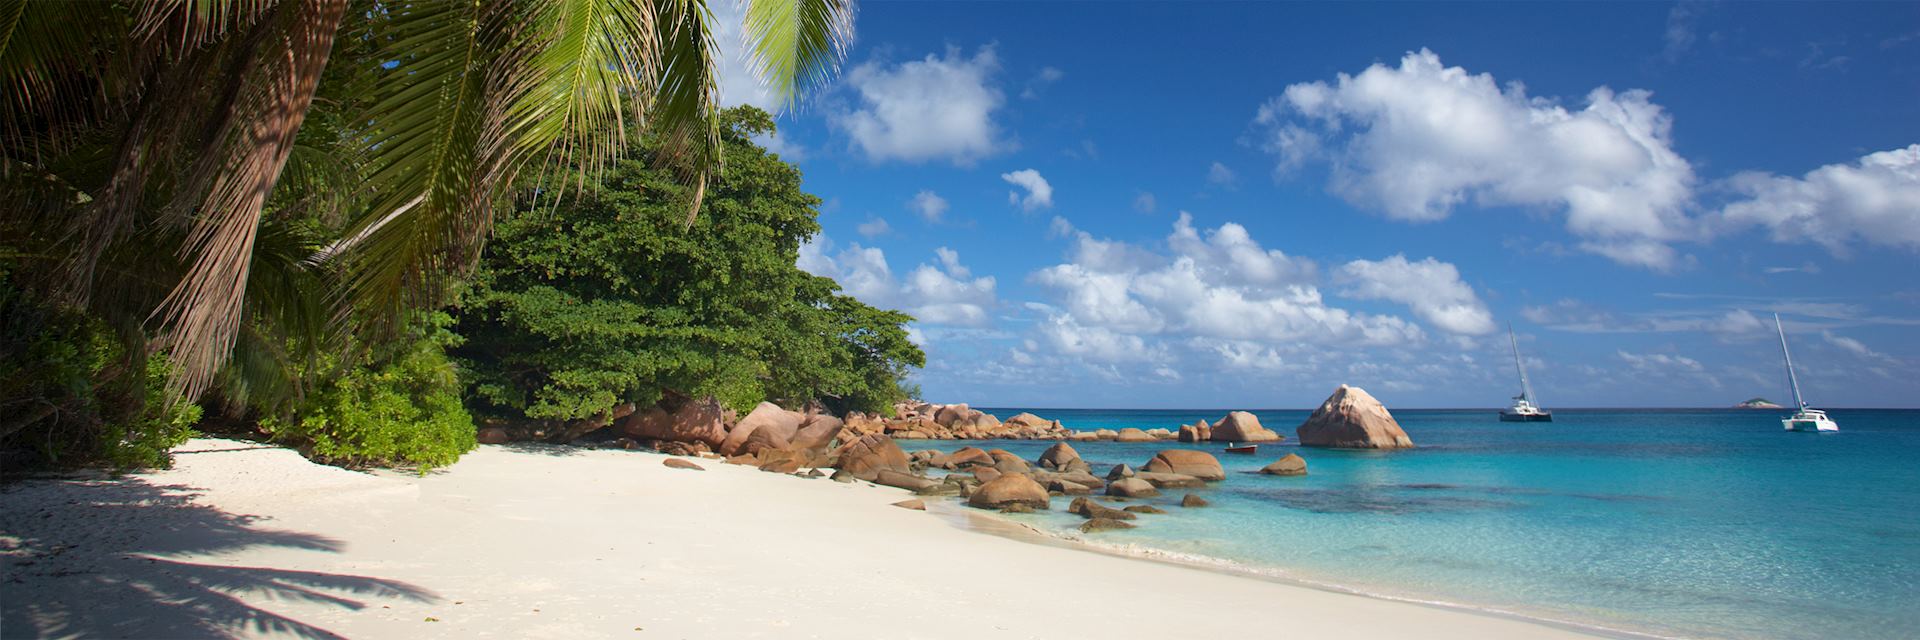 Praslin Island, Seychelles